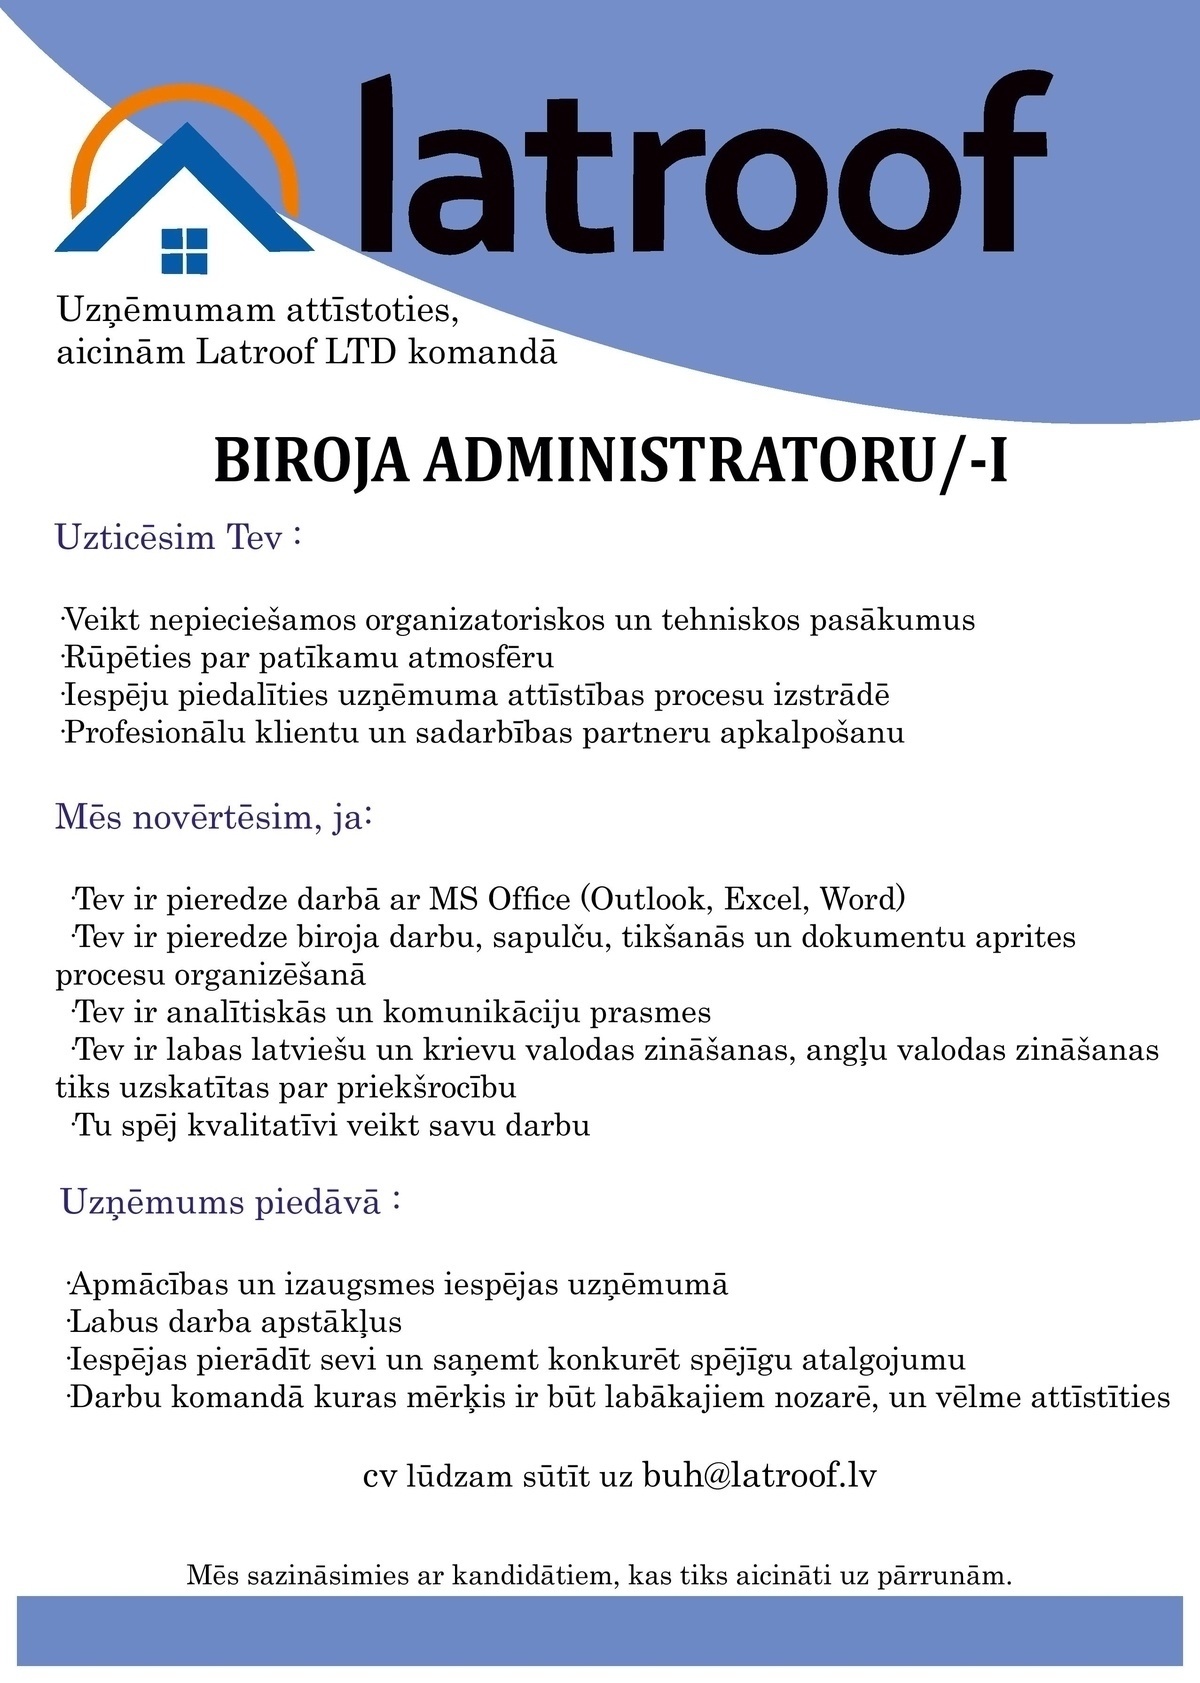 Latroof LTD, SIA Biroja administrators/-e